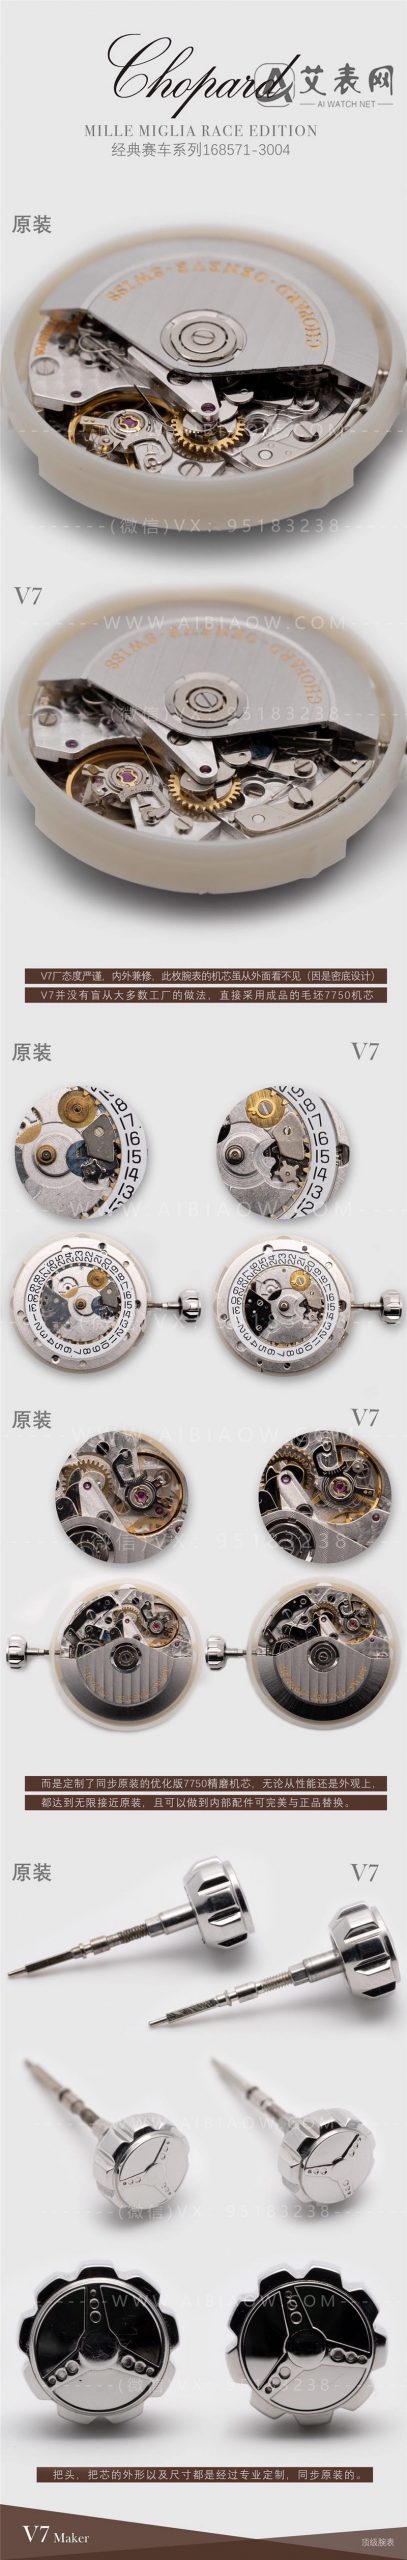 V7厂萧邦chopard经典赛车系列44mm男士腕表对比正品评测  第4张